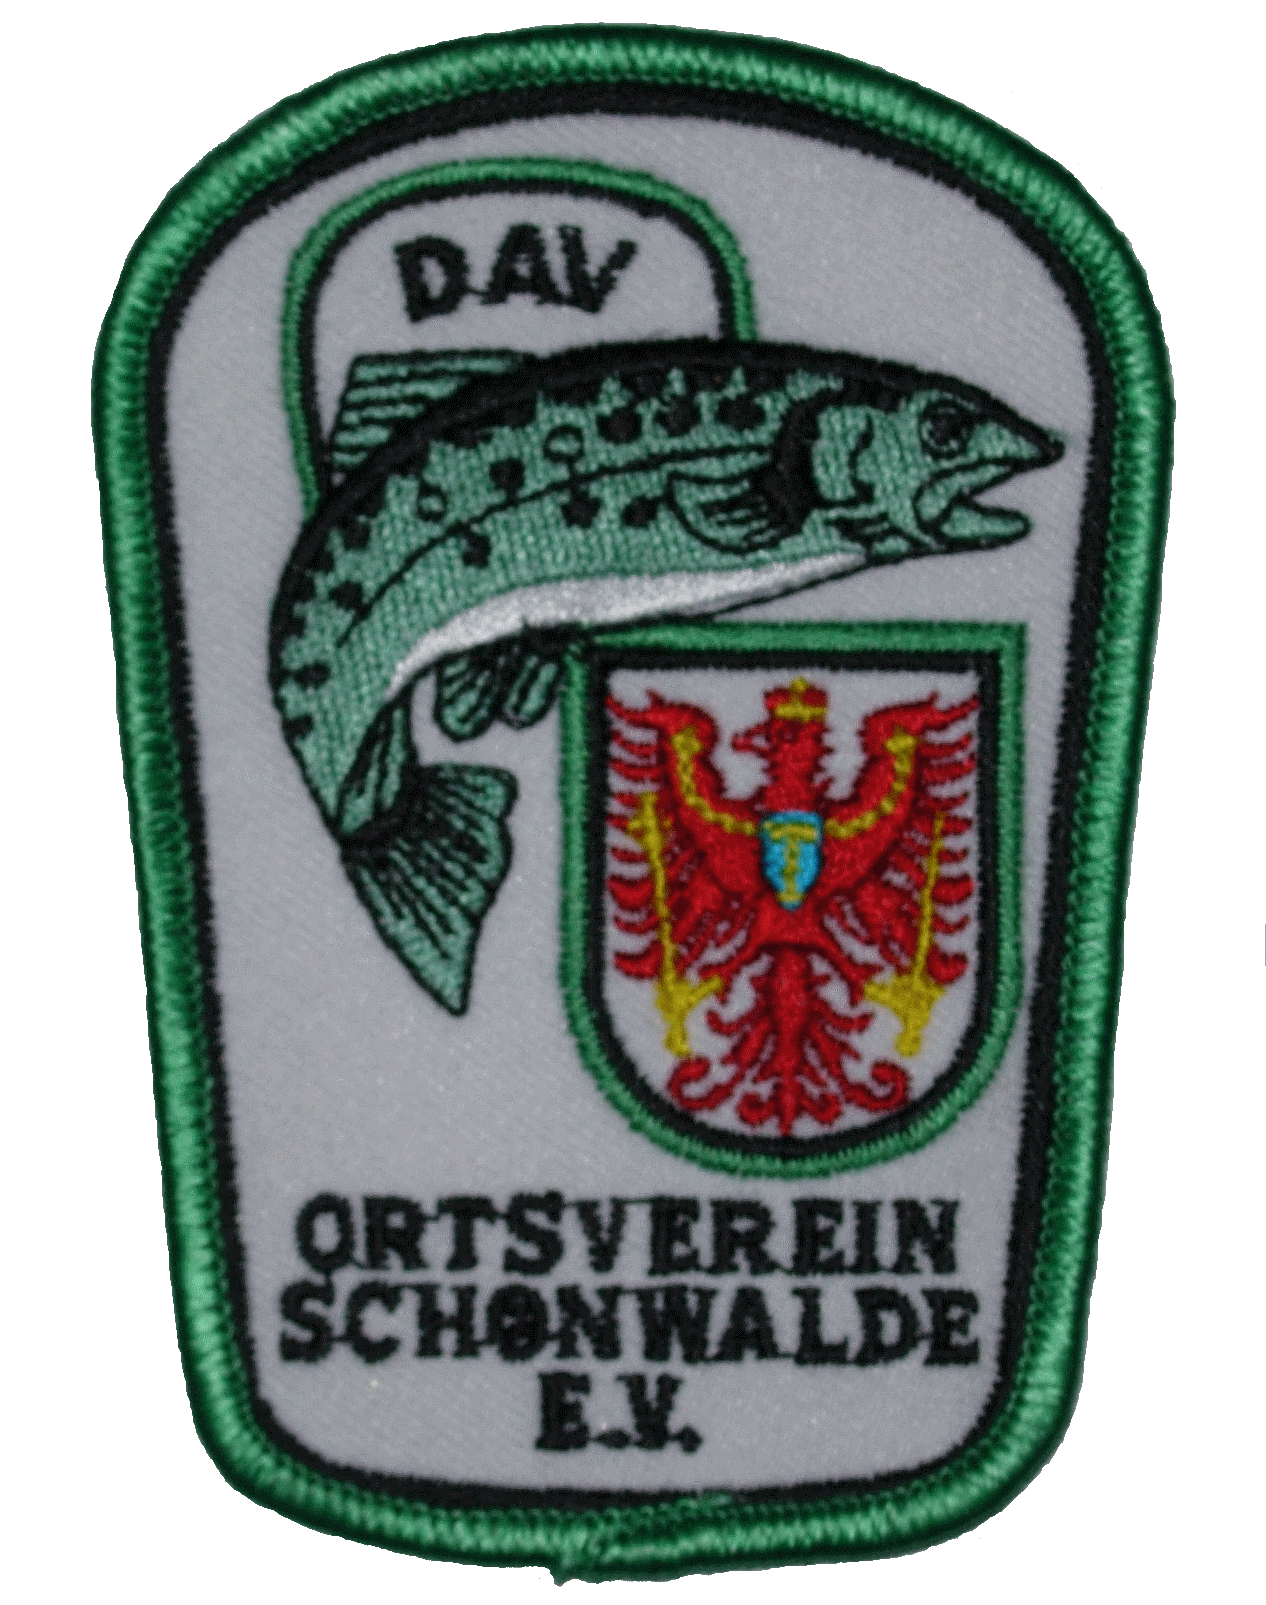 OVschoenwalde